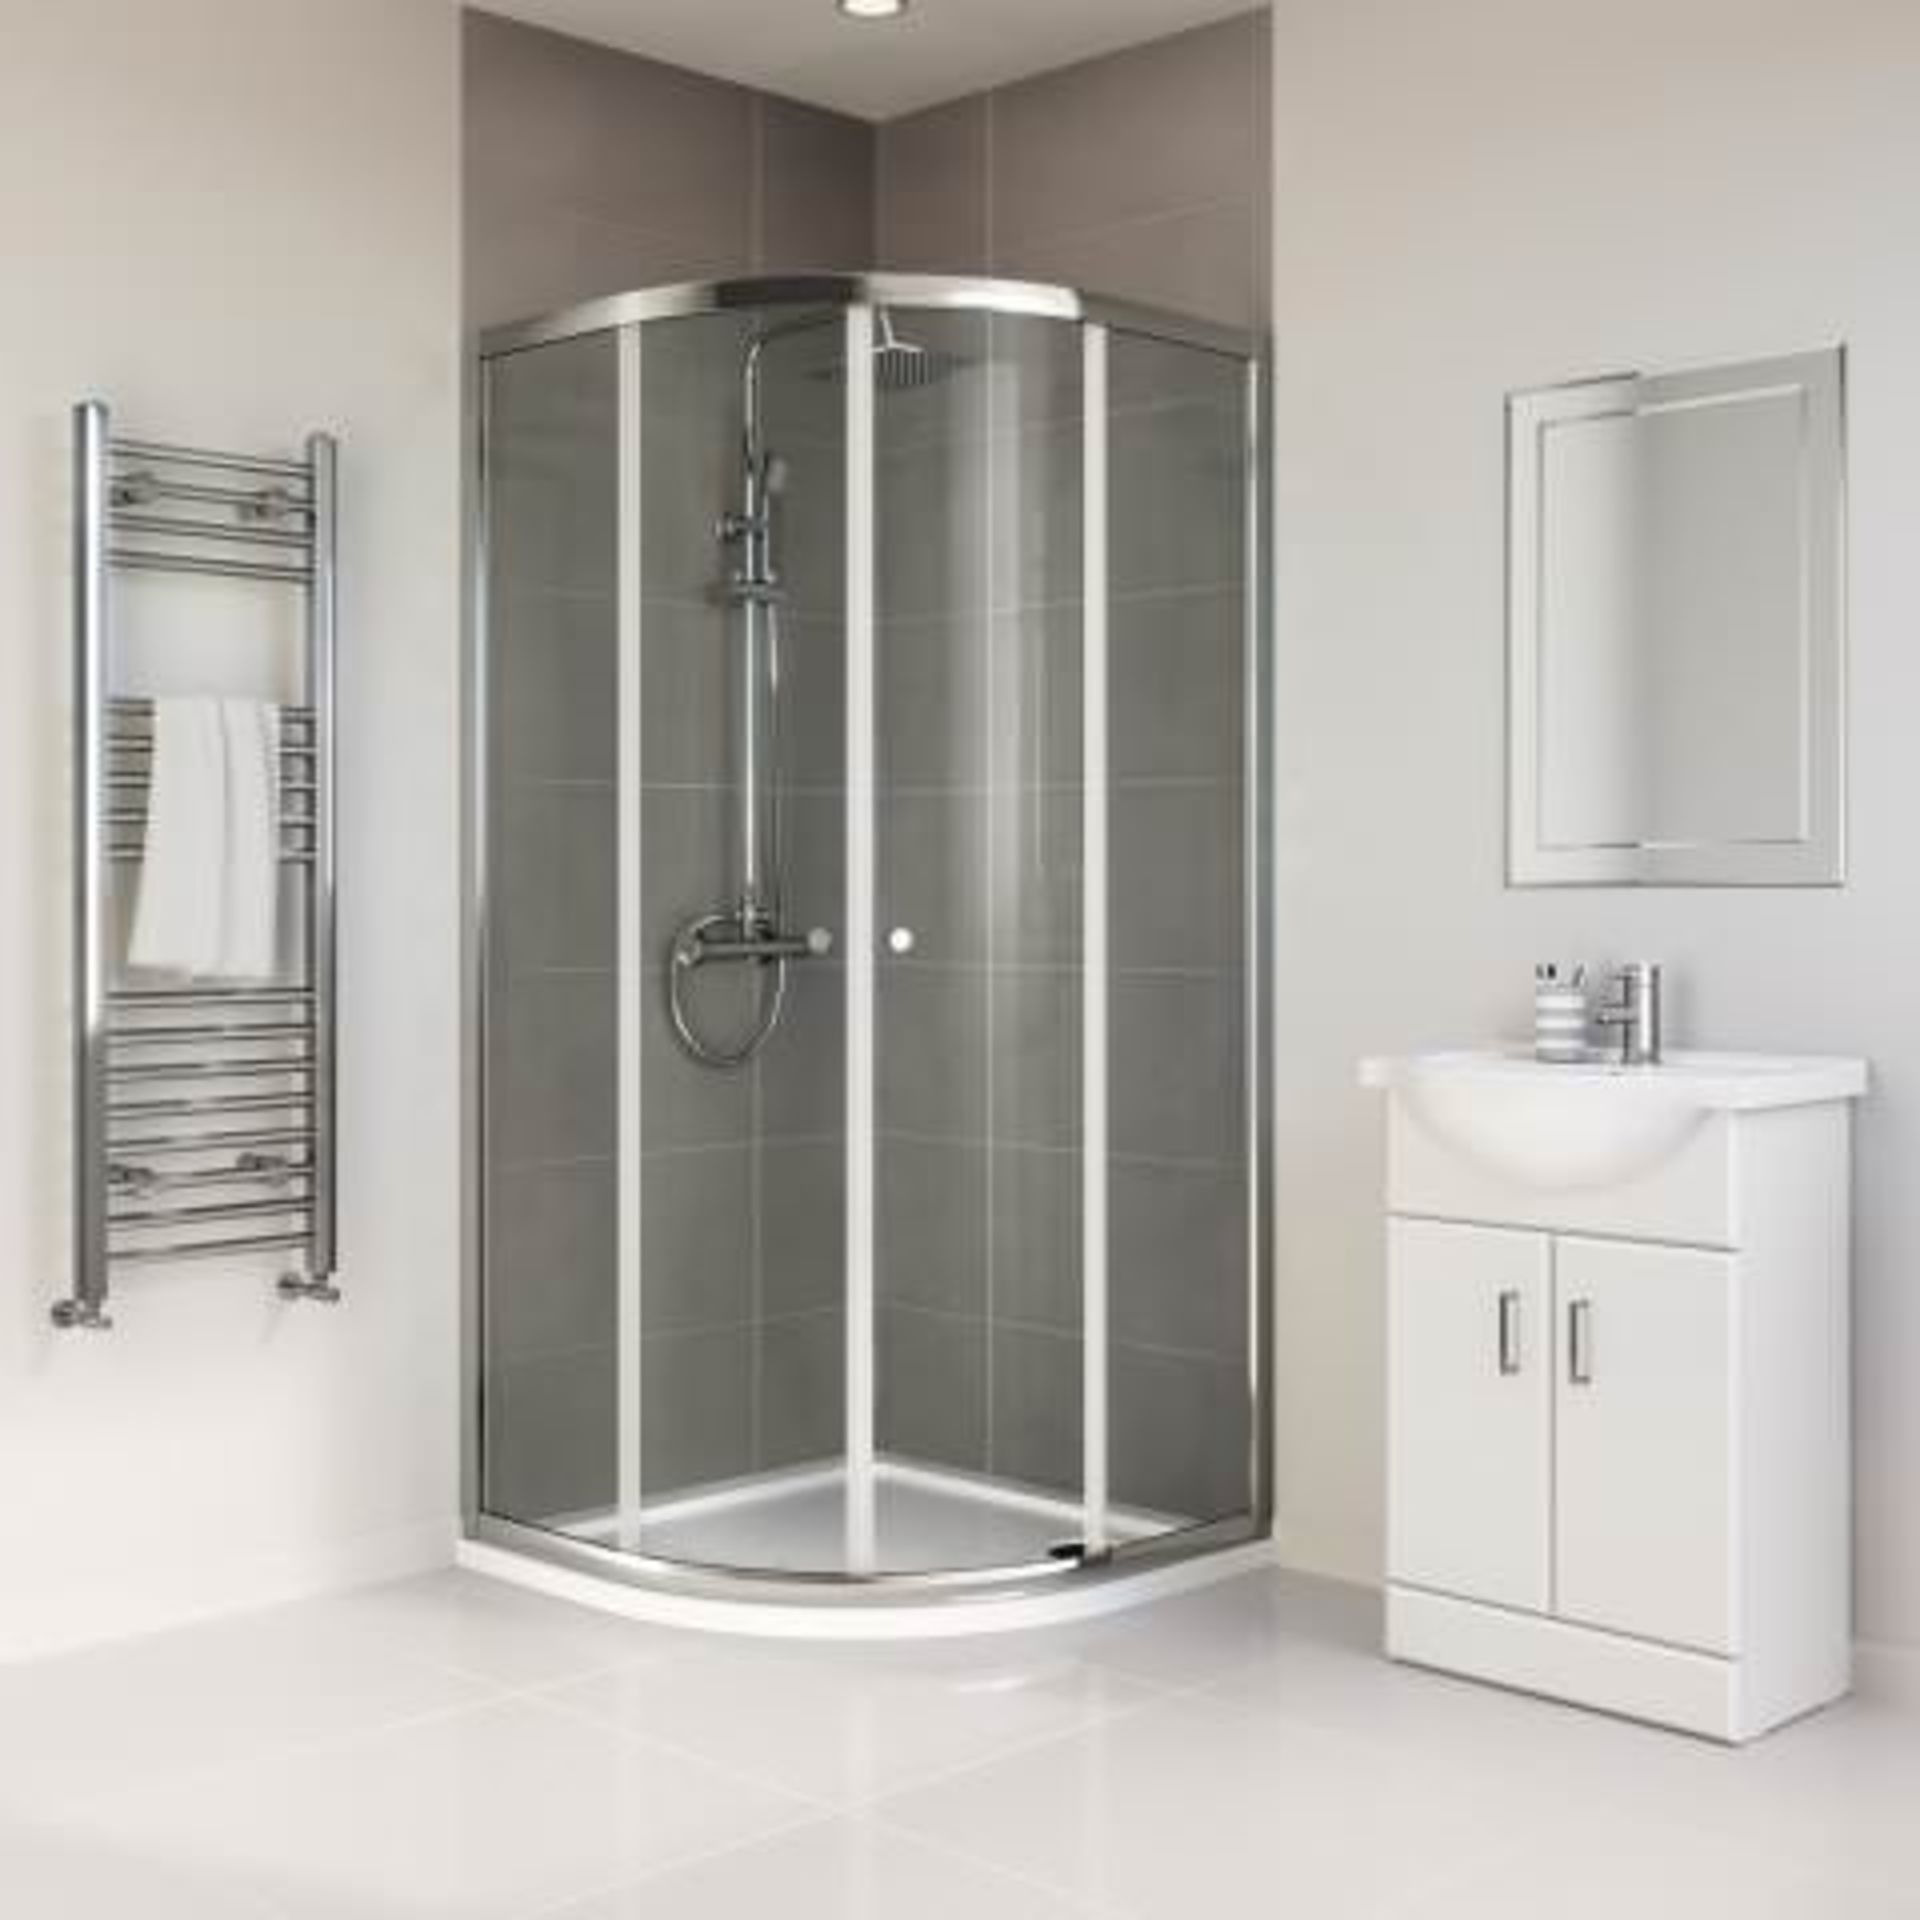 NEW Twyfords 800x800mm - Elements Quadrant Shower Enclosure. RRP £429.99.Shower Enclosures fe...